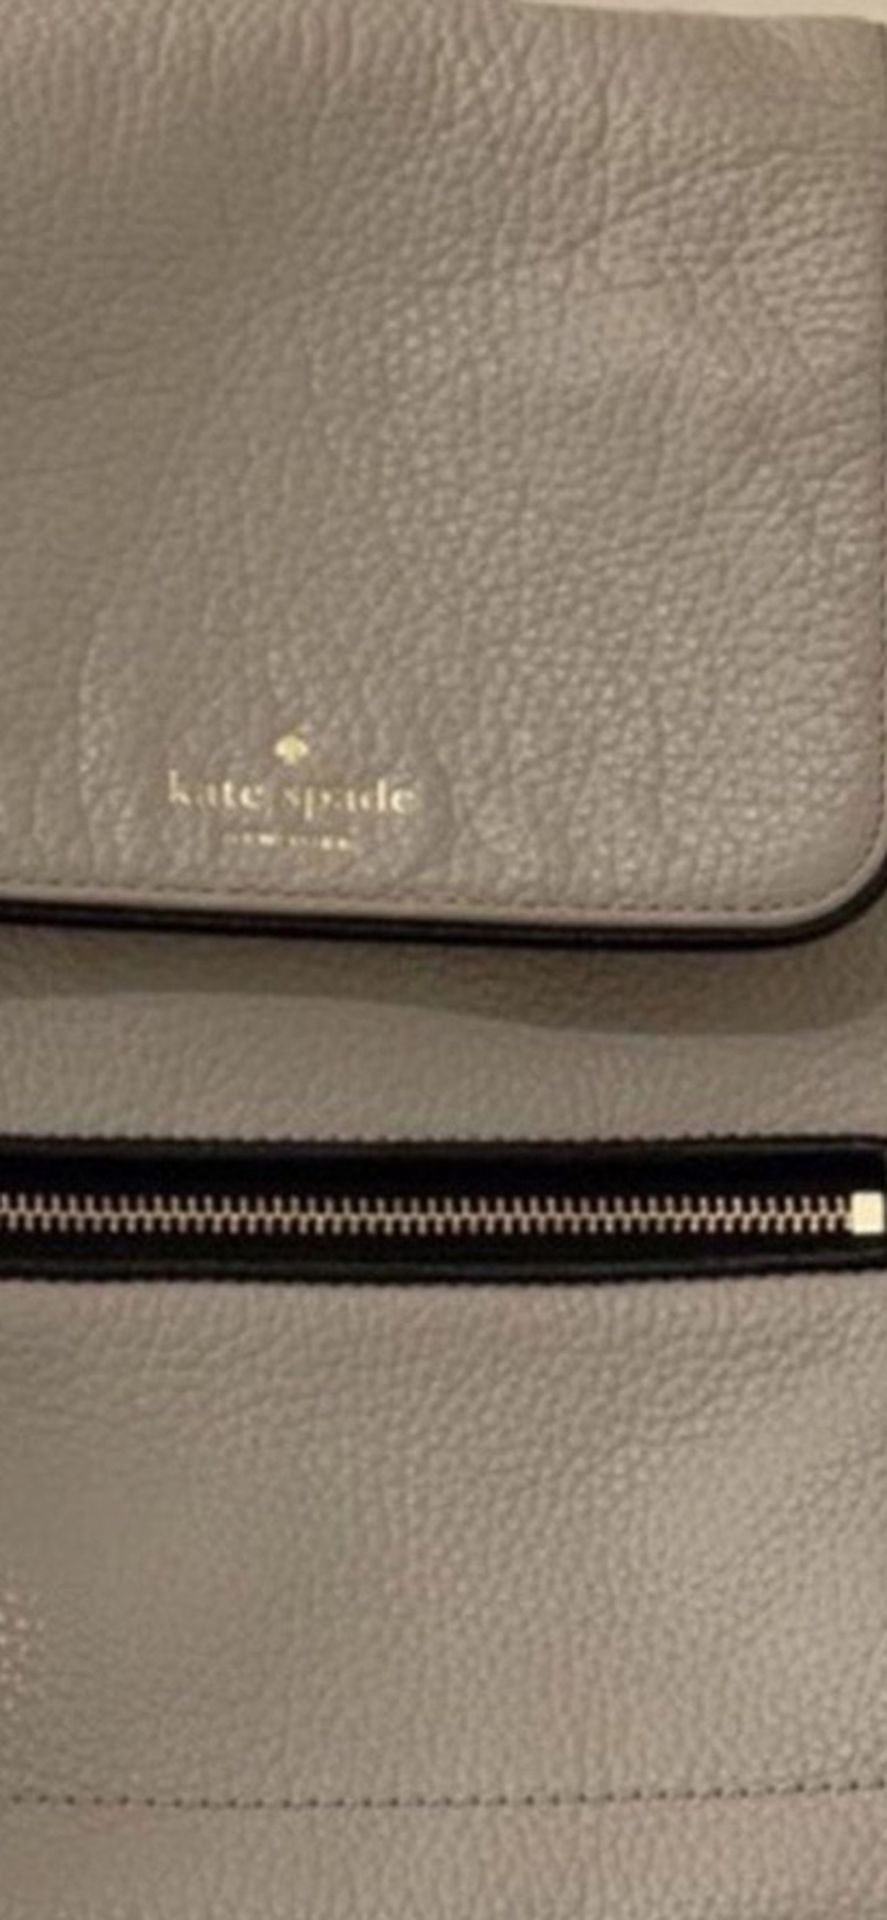 Kate Spade Purse Backpack